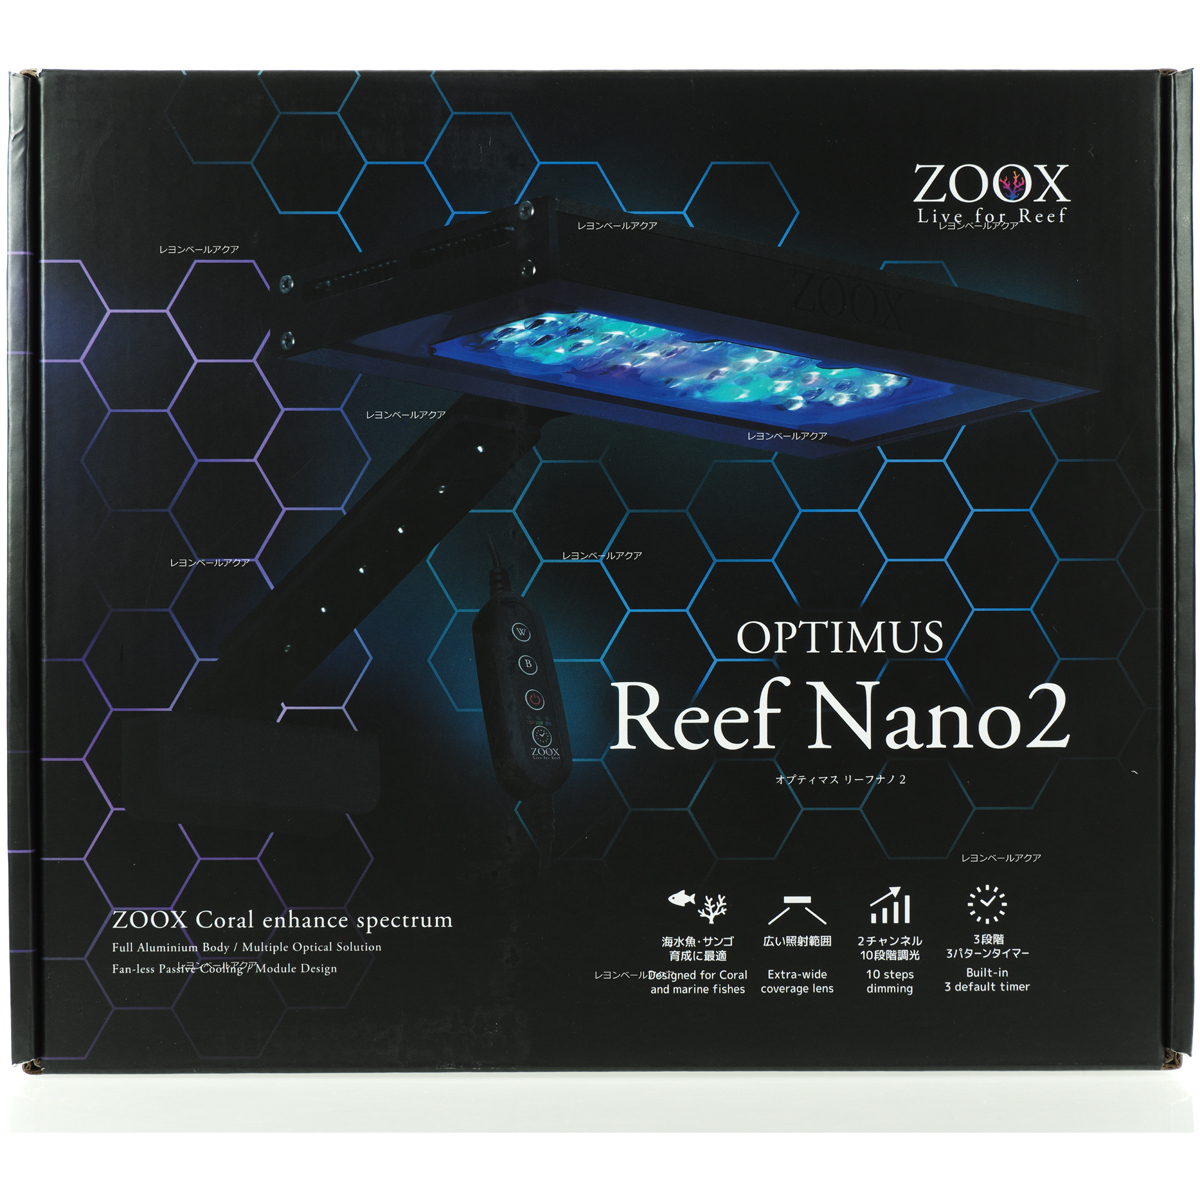 [ бесплатная доставка по всей стране ] ZOOXzoks Optima s leaf nano 2